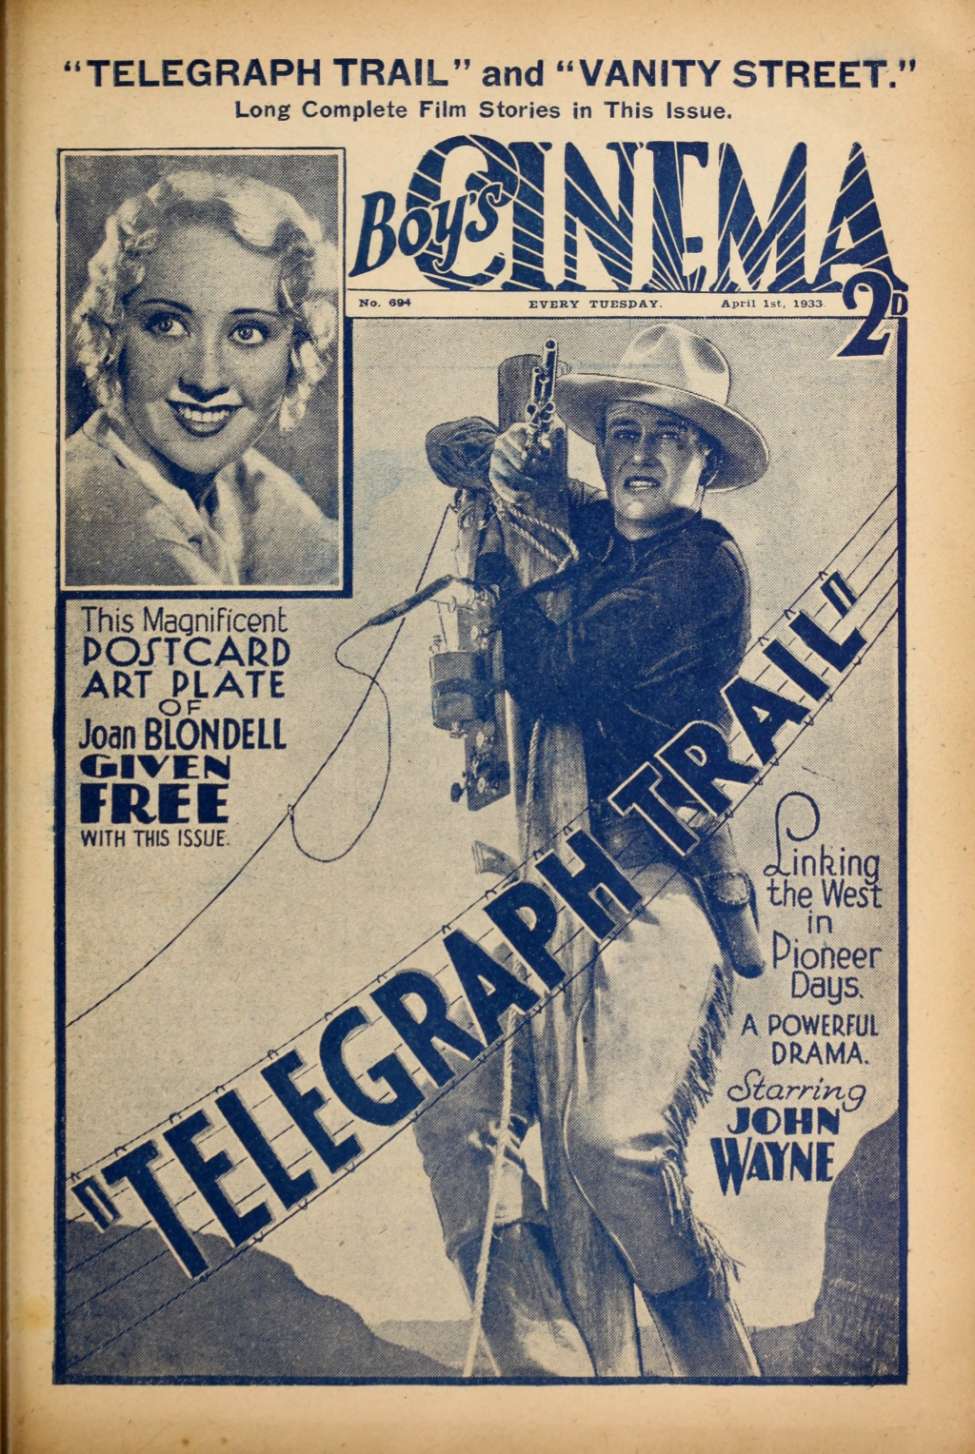 Book Cover For Boy's Cinema 694 - The Telegraph Trail - John Wayne